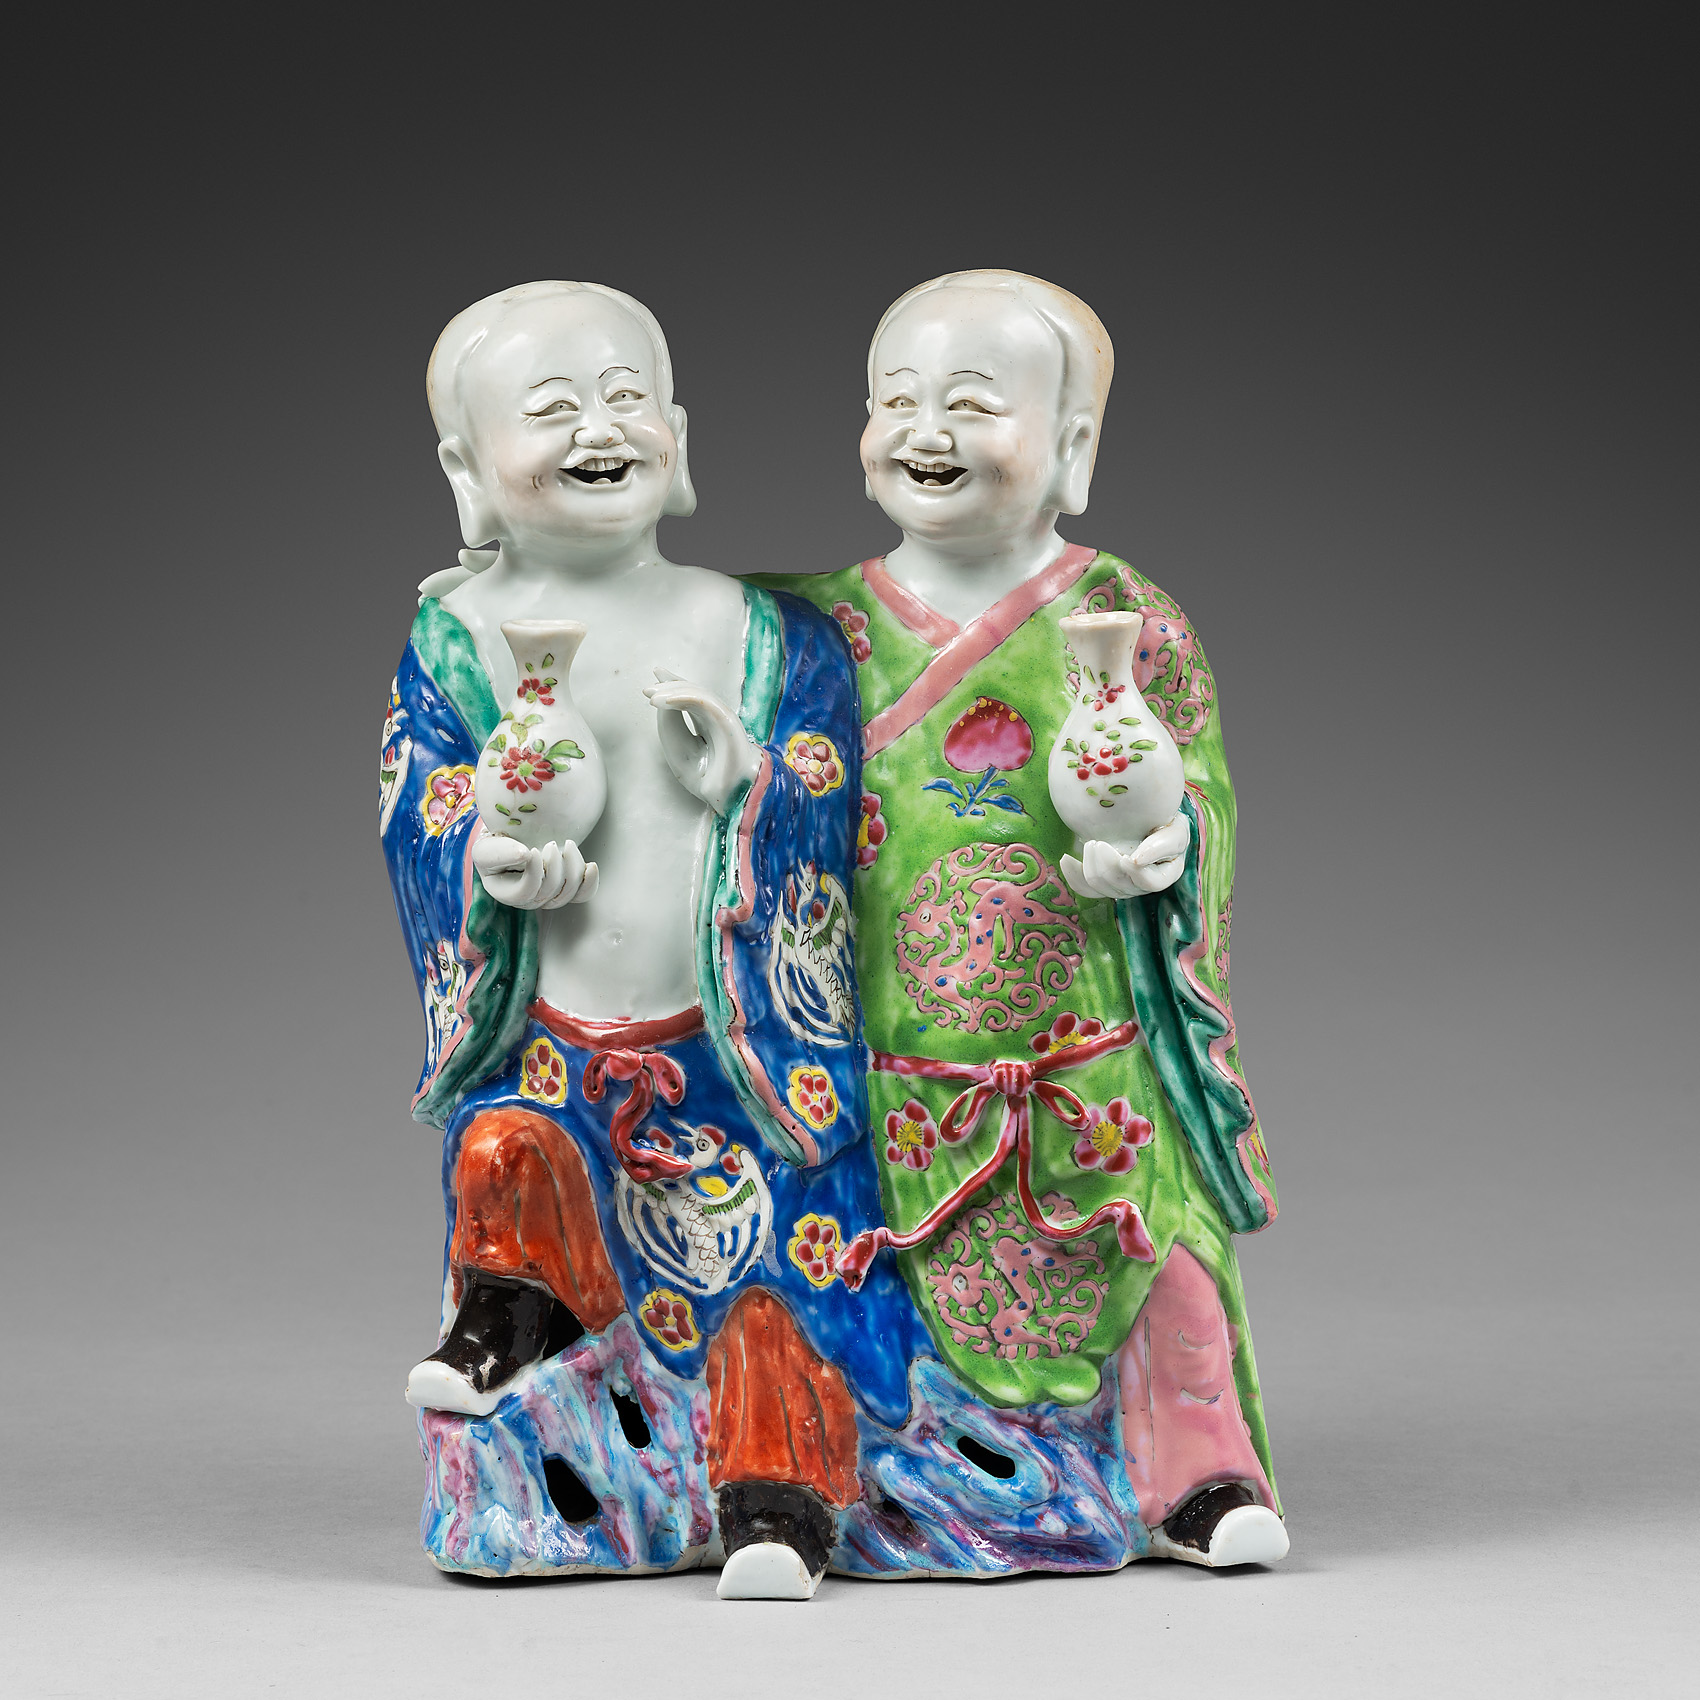 Porcelaine Qianlong (1736-1795), ca. 1760/1770, Chine